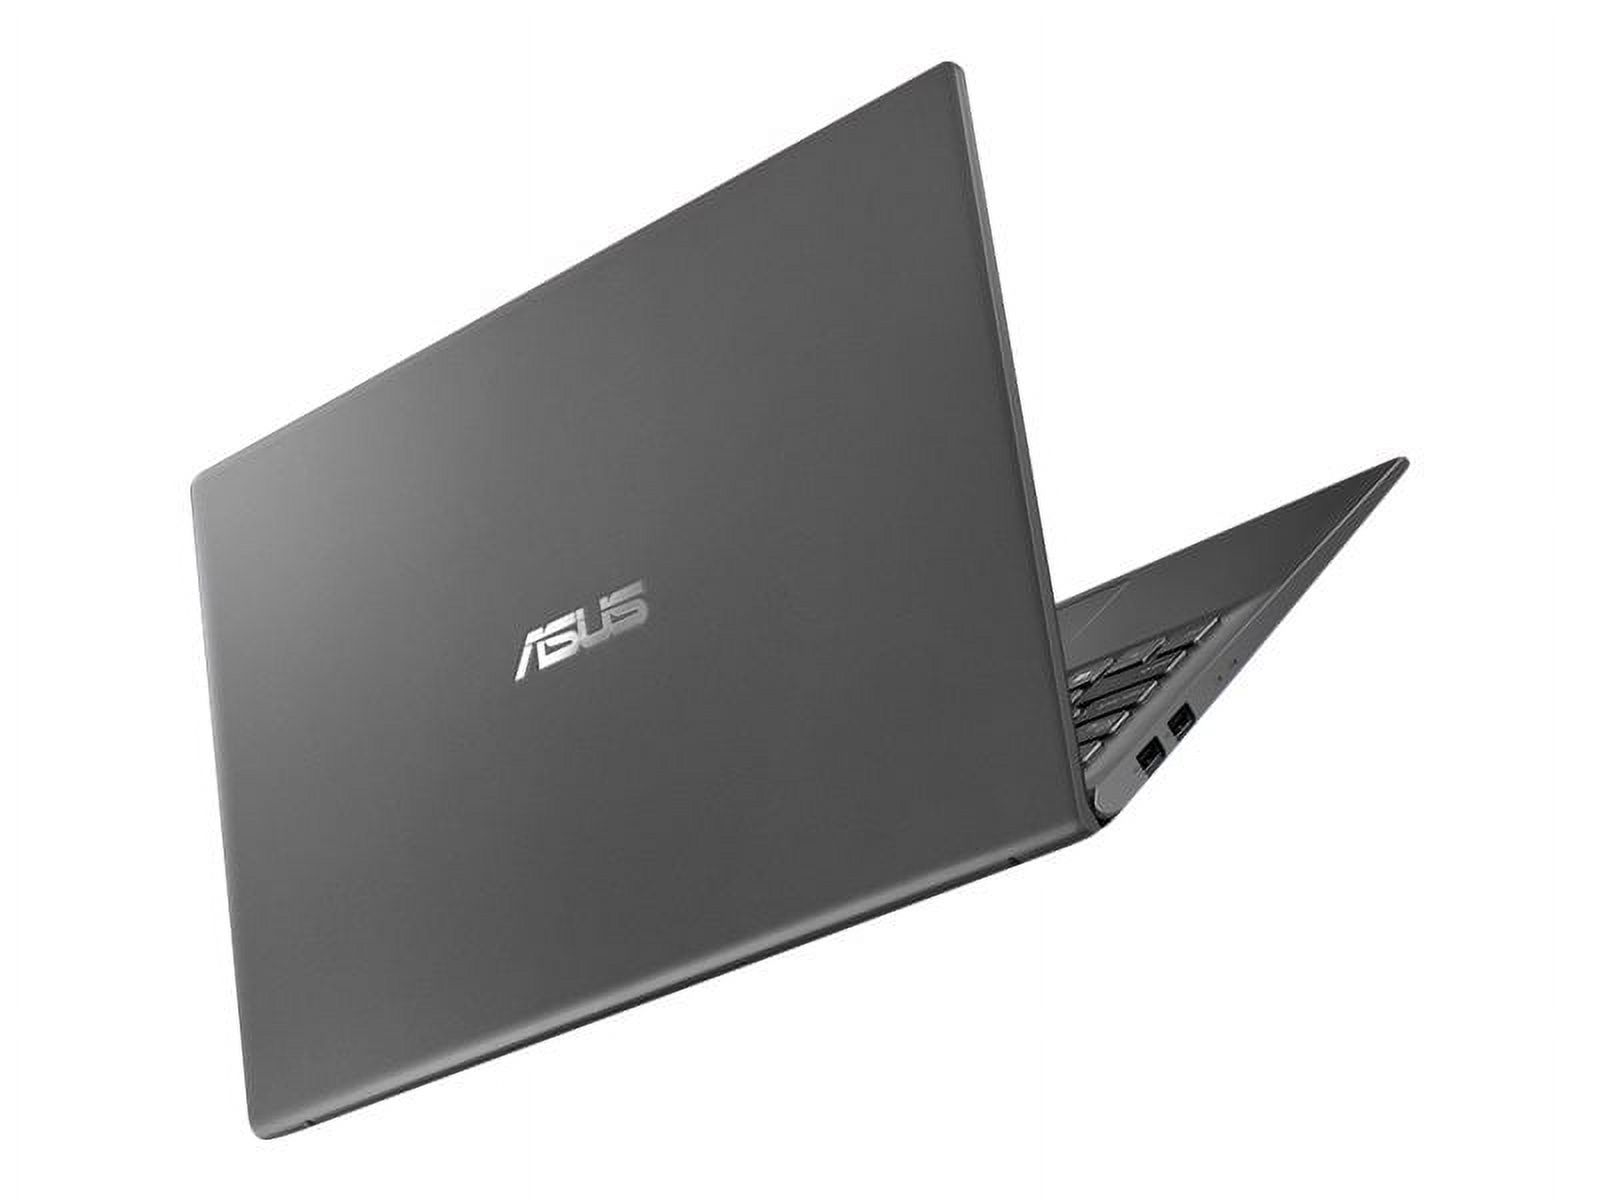 ASUS F512FA AB34 - Ultrabook - Core i3 8145U / 2.1 GHz - Windows 10 Home 64-bit in S mode - UHD Graphics 620 - 8 GB RAM - 128 GB SSD - 15.6" 1920 x 1080 (Full HD) - Wi-Fi 5 - slate gray (LCD cover), slate gray IMR (top) - image 1 of 2